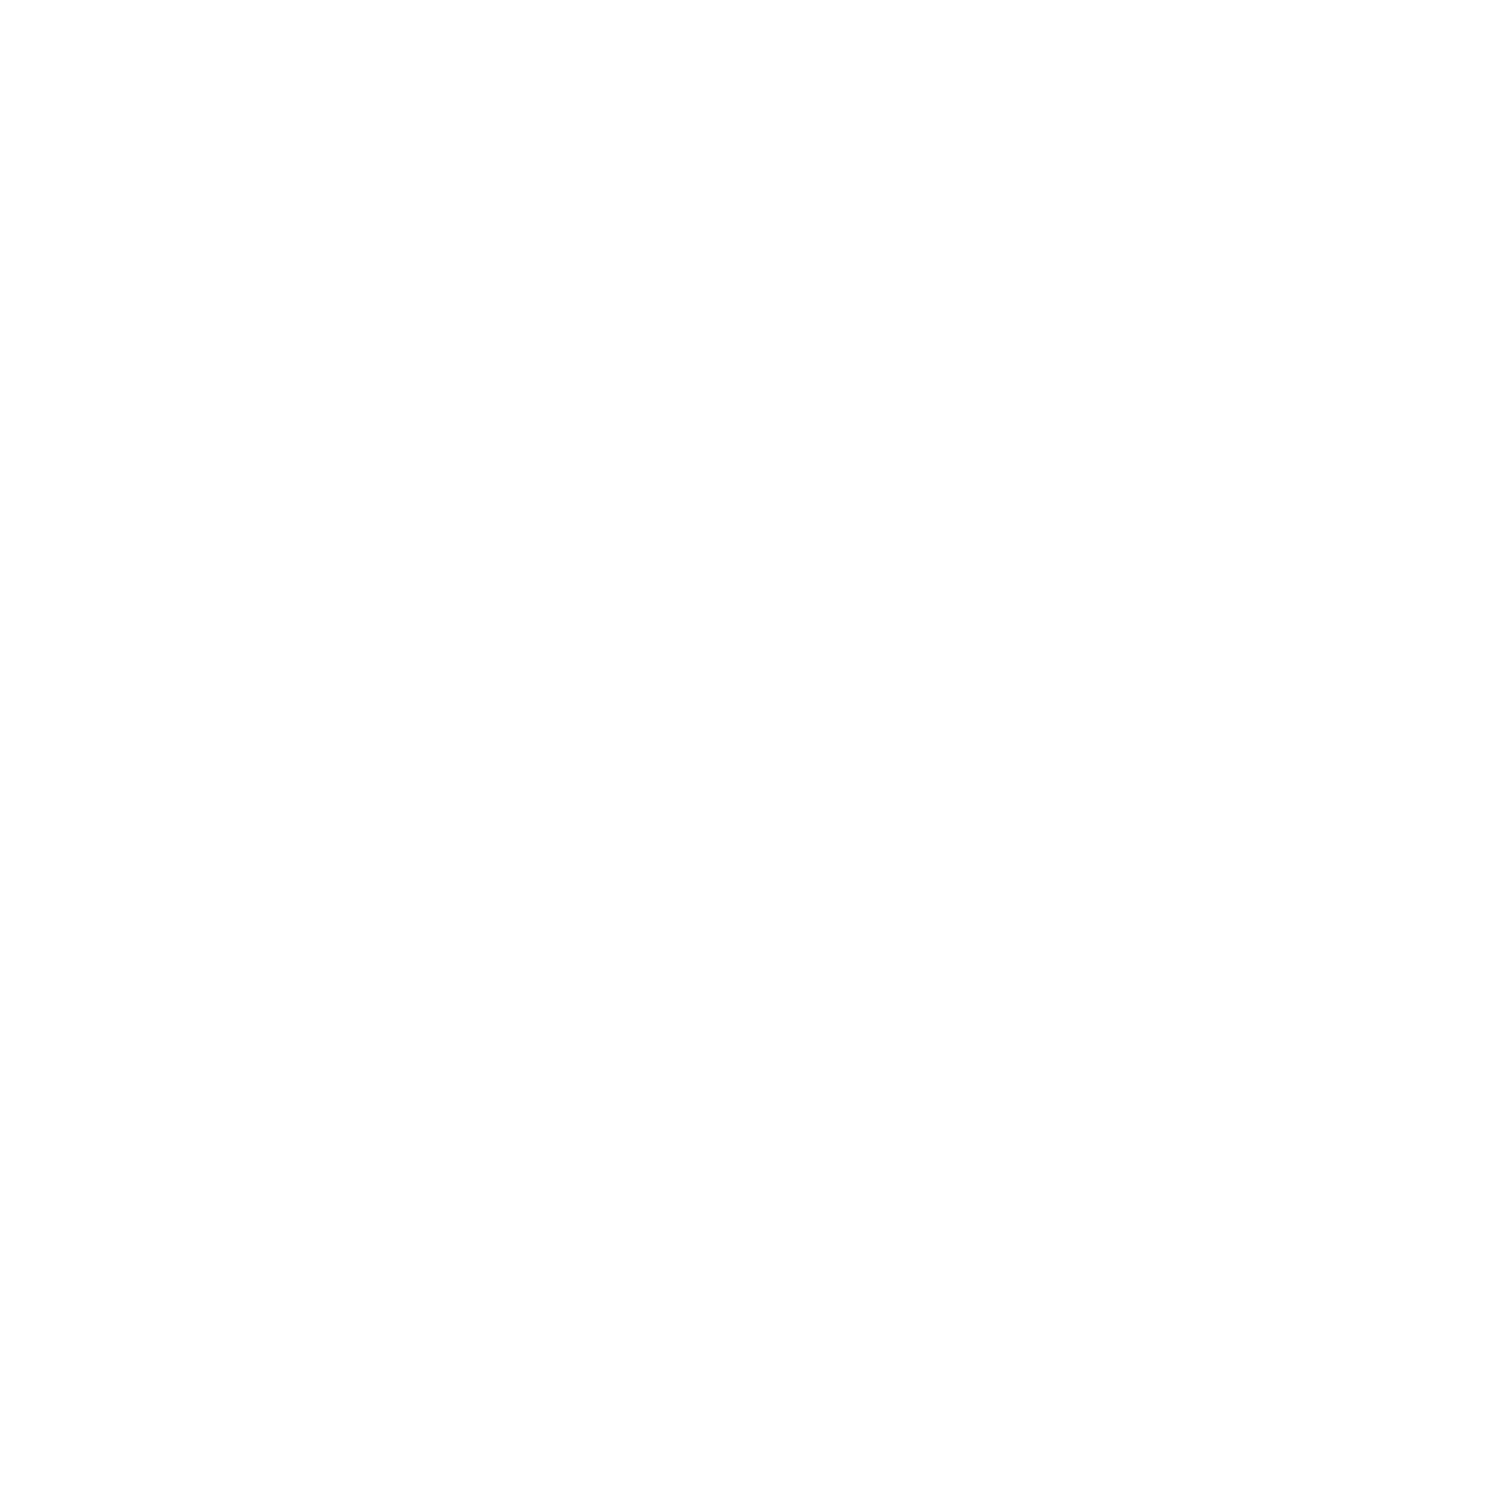 Ferme Saint-Monon